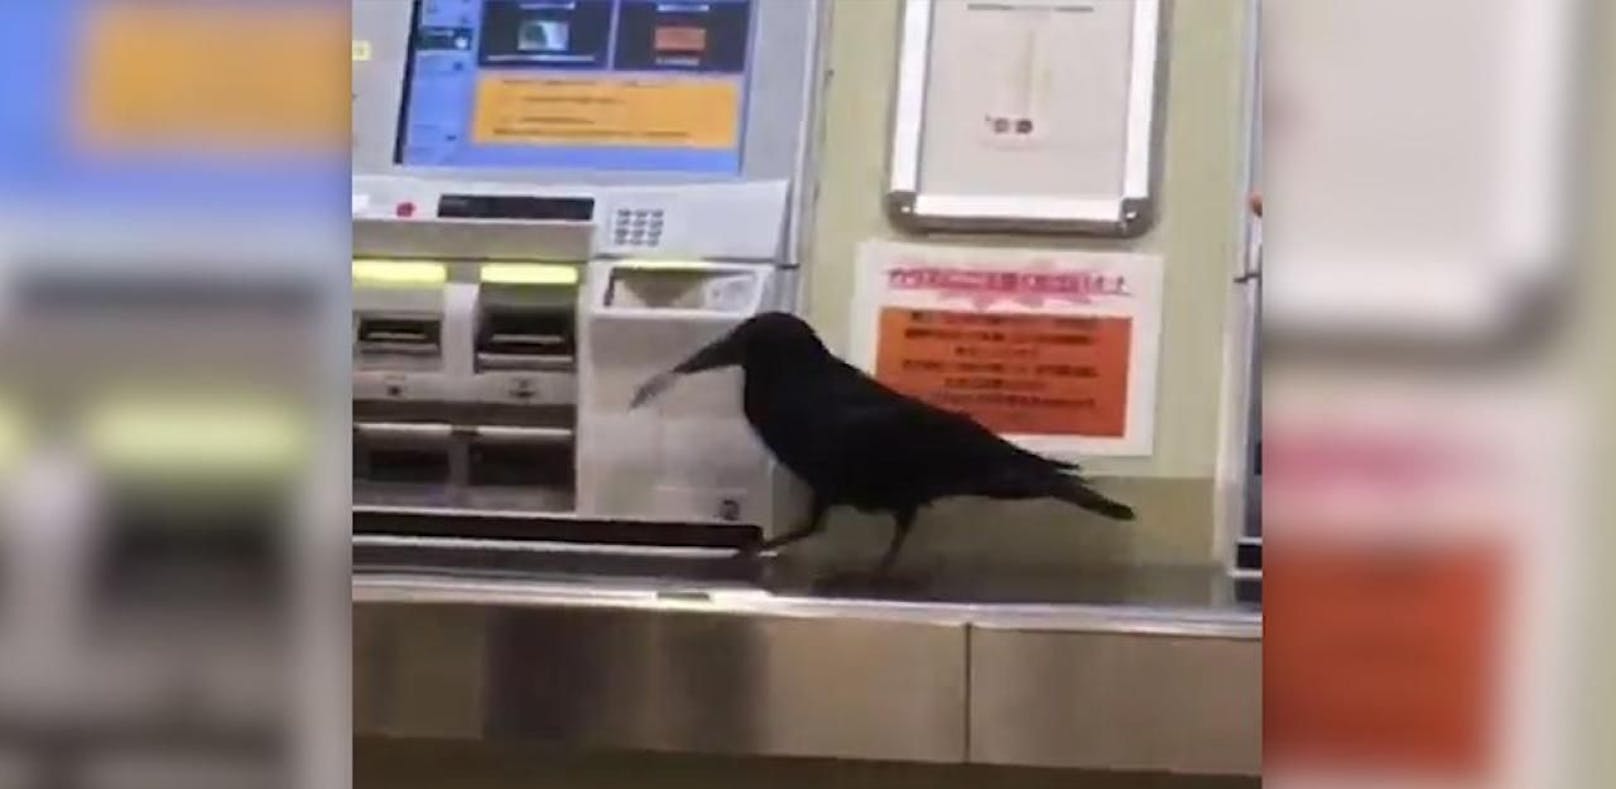 Krähe will sich Ticket am Automaten holen